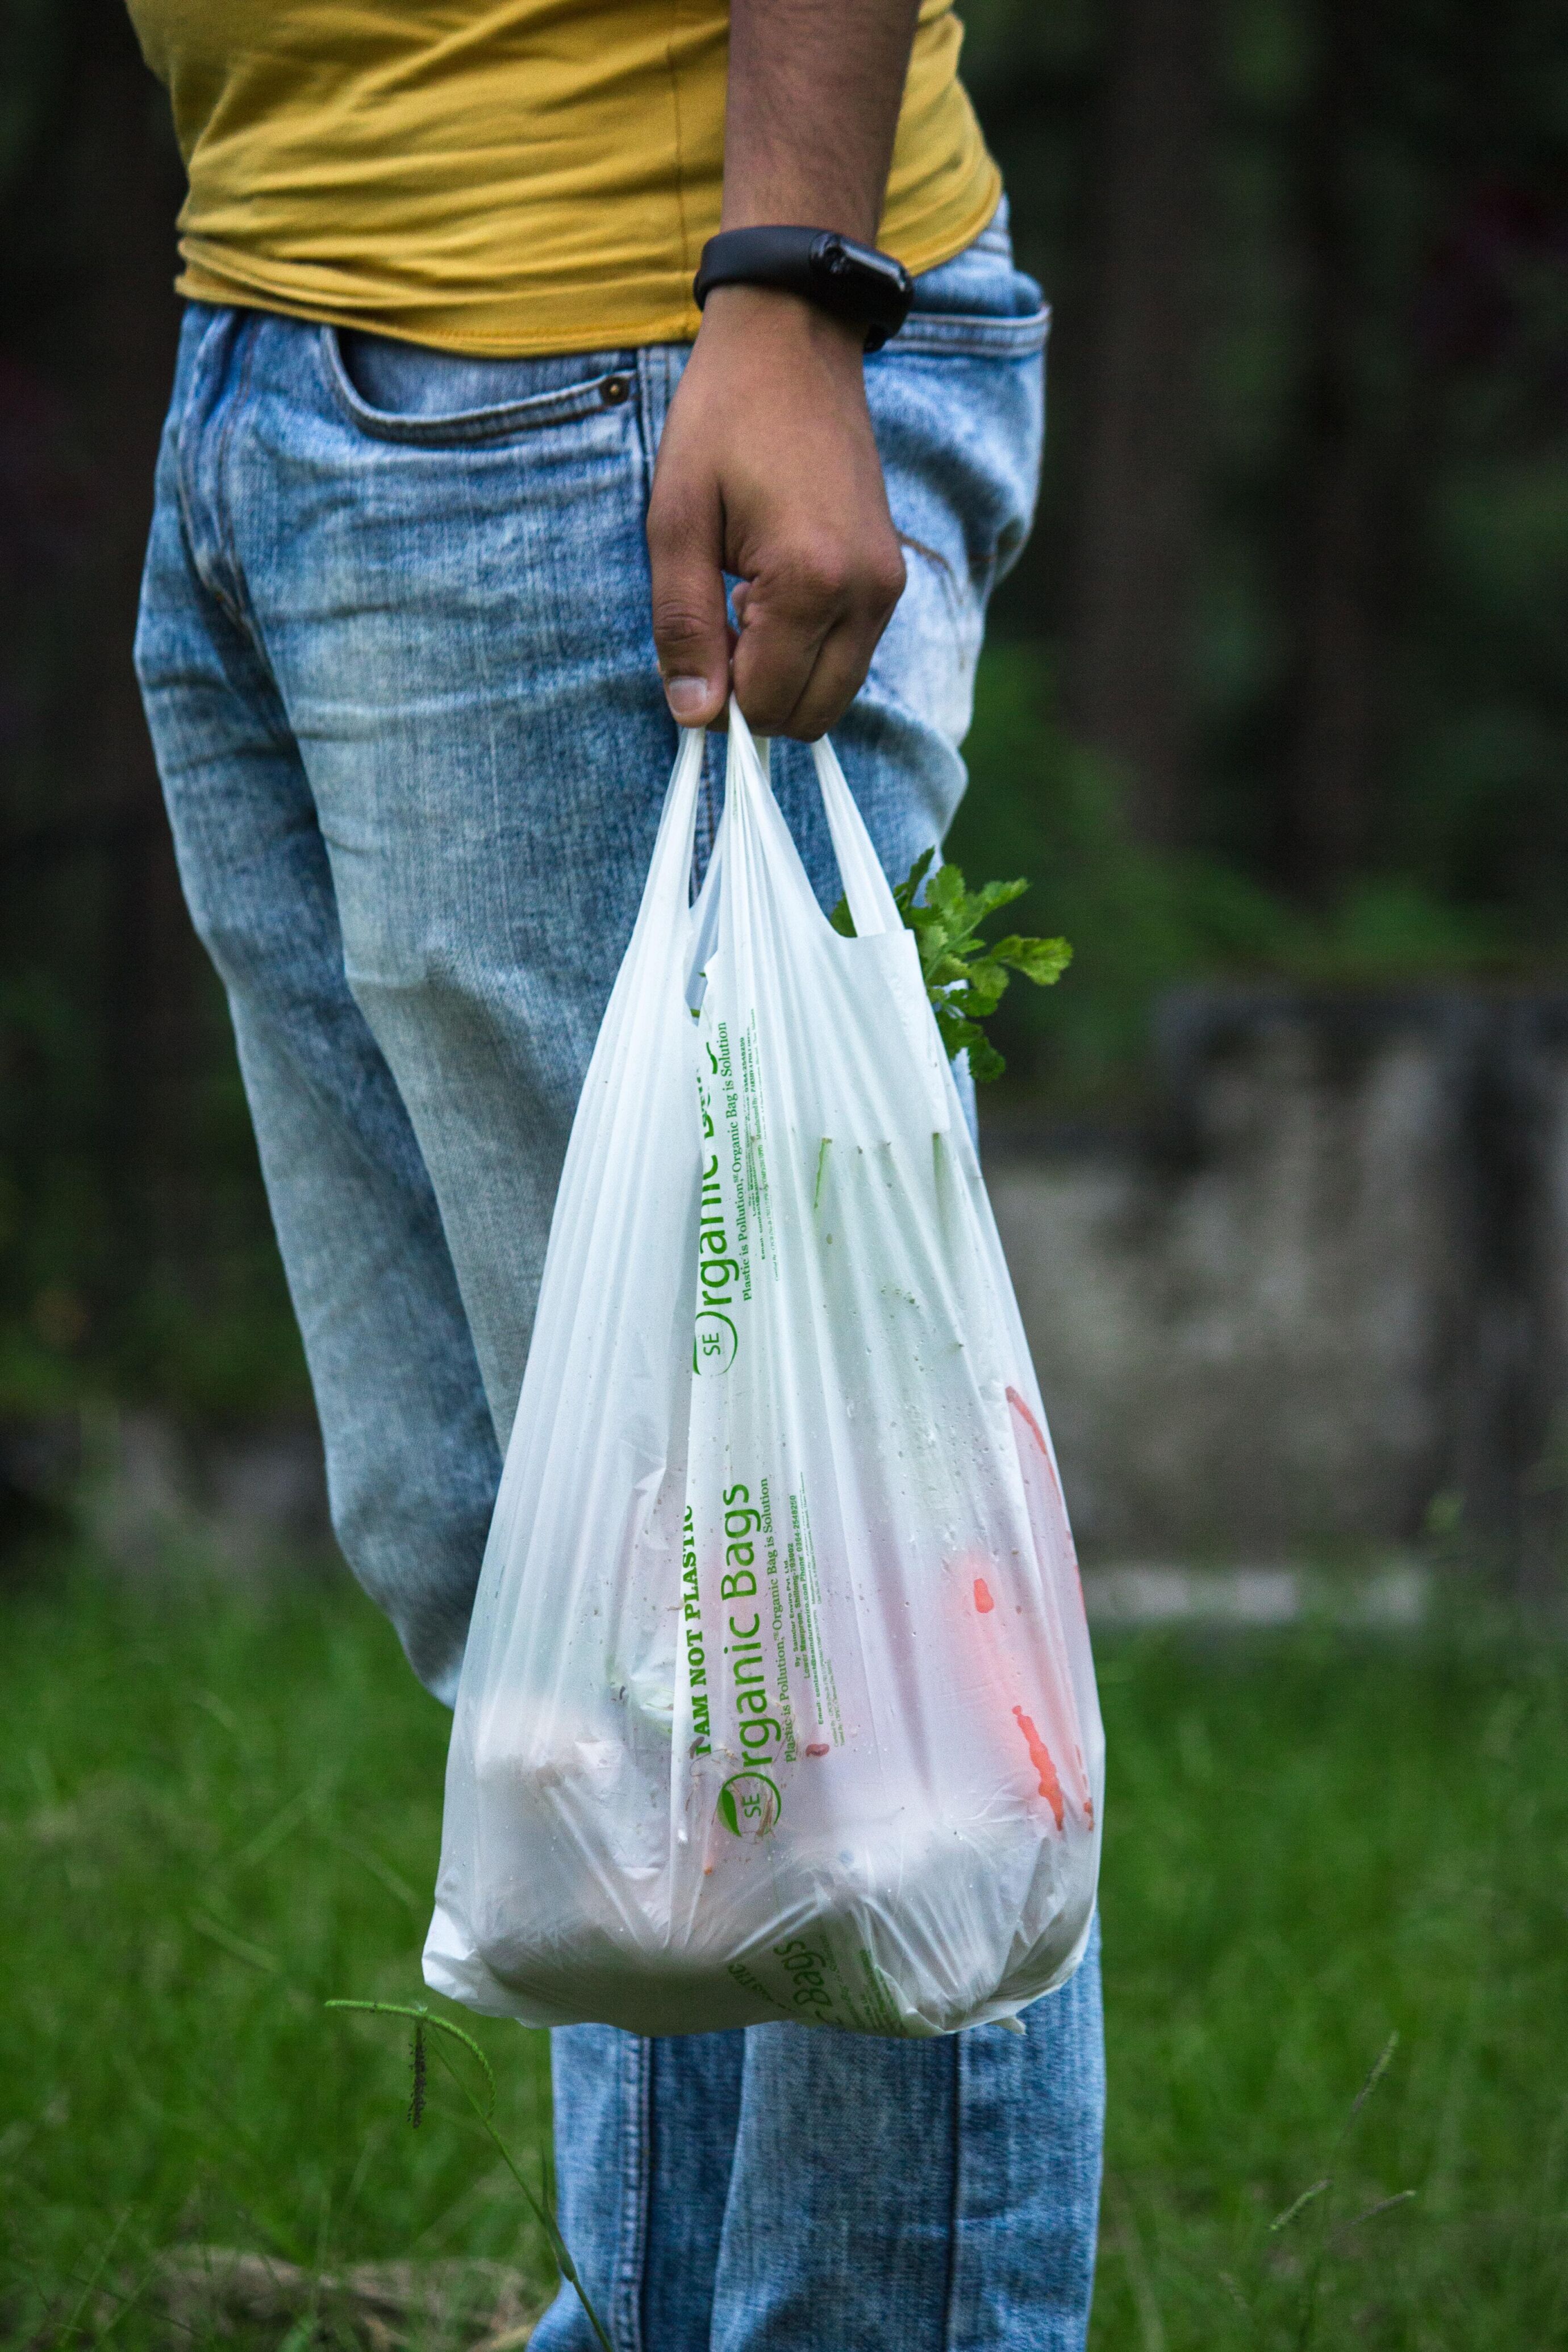 Bioplastic bag